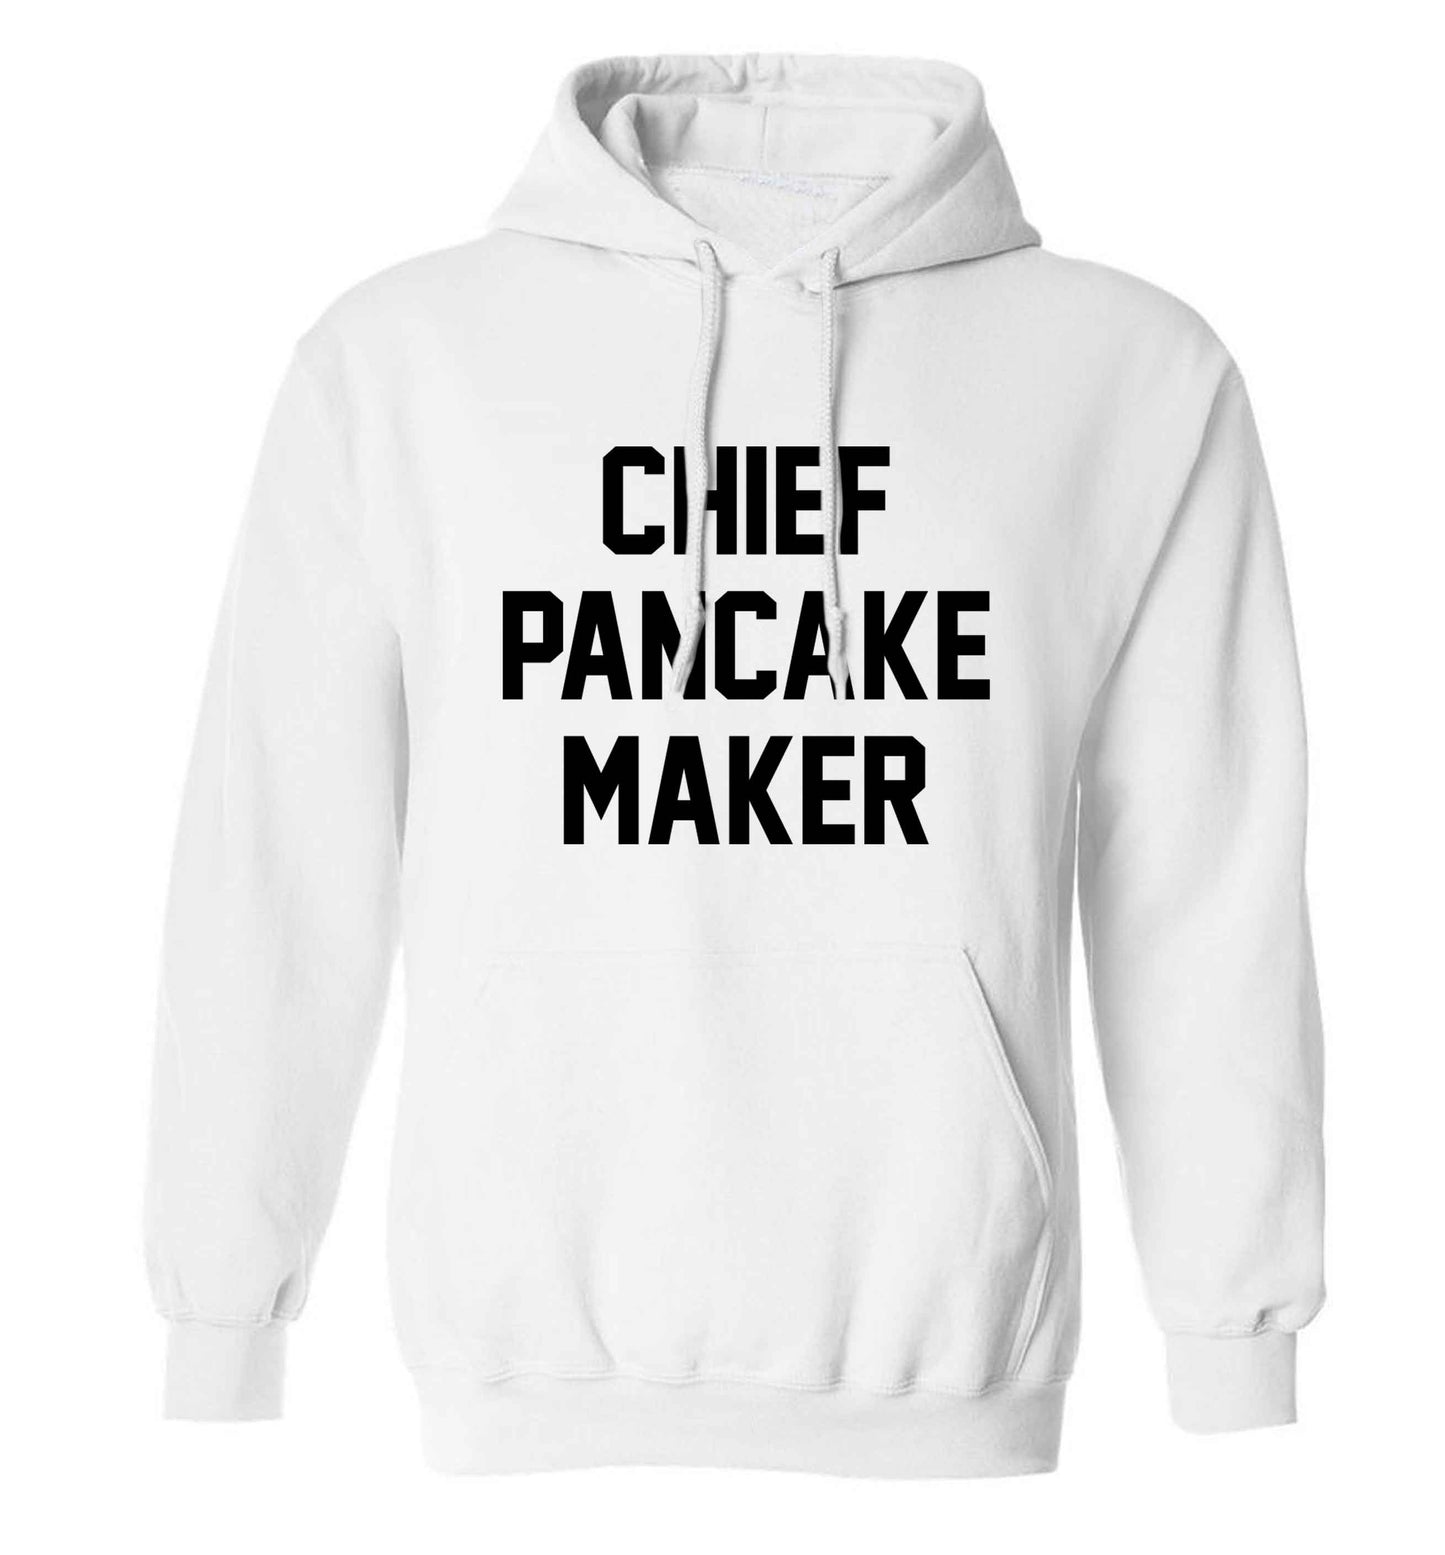 Chief pancake maker adults unisex white hoodie 2XL